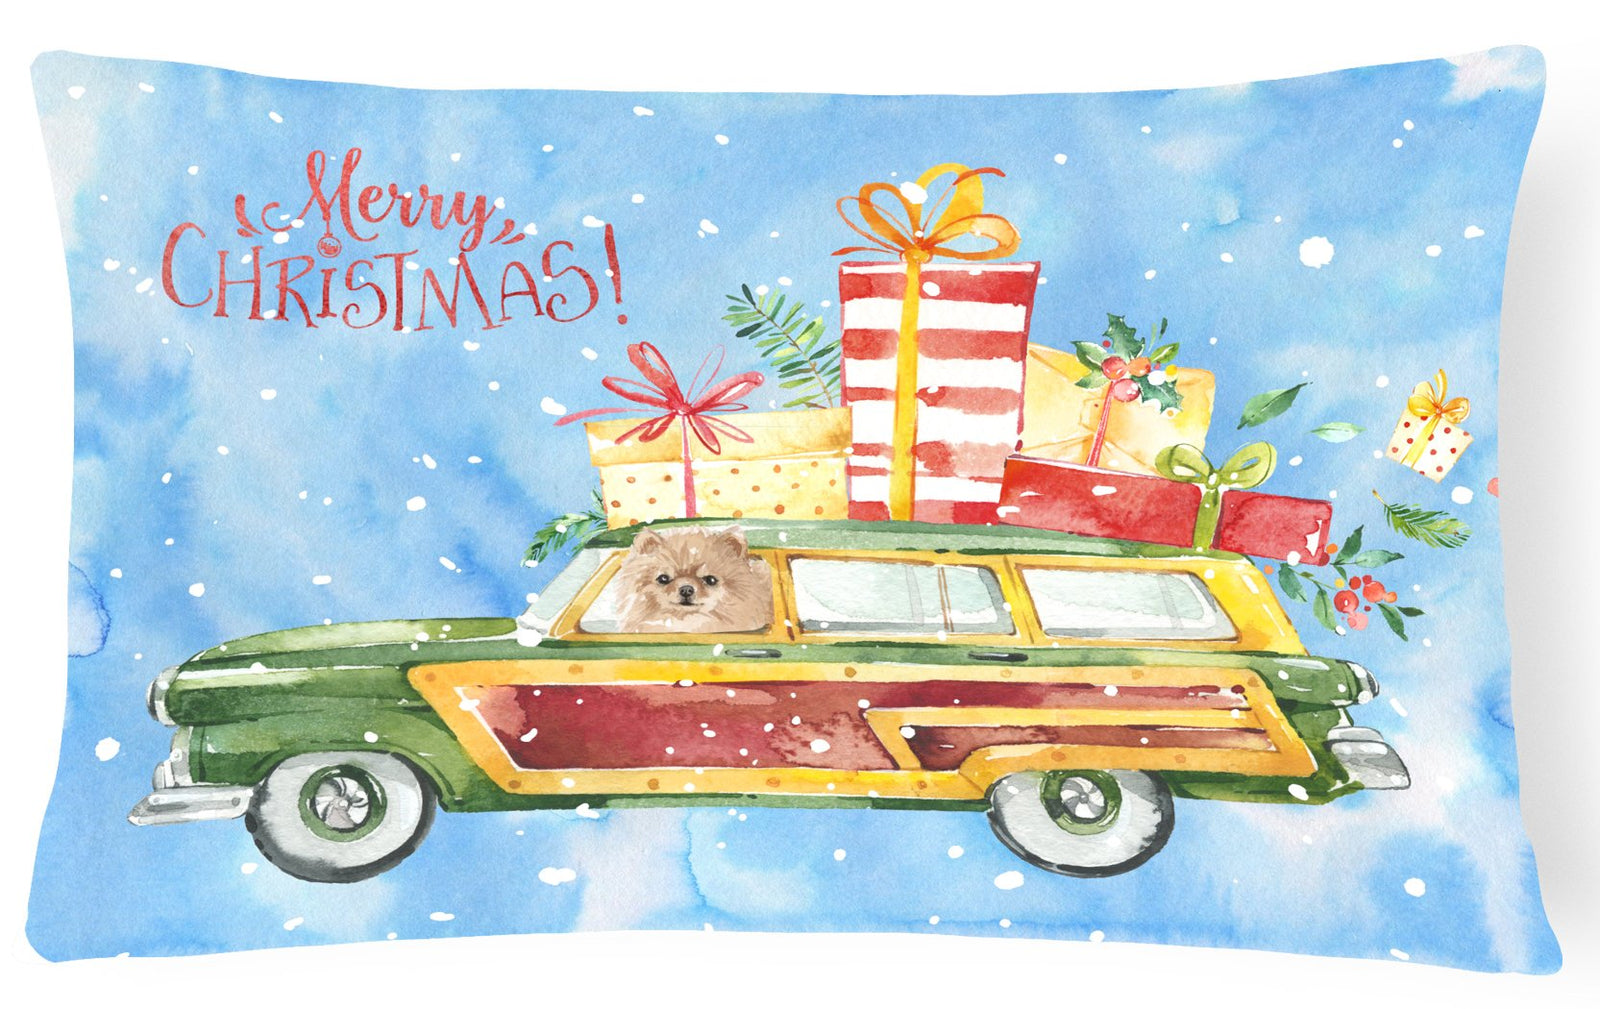 Merry Christmas Pomeranian Canvas Fabric Decorative Pillow CK2462PW1216 by Caroline's Treasures